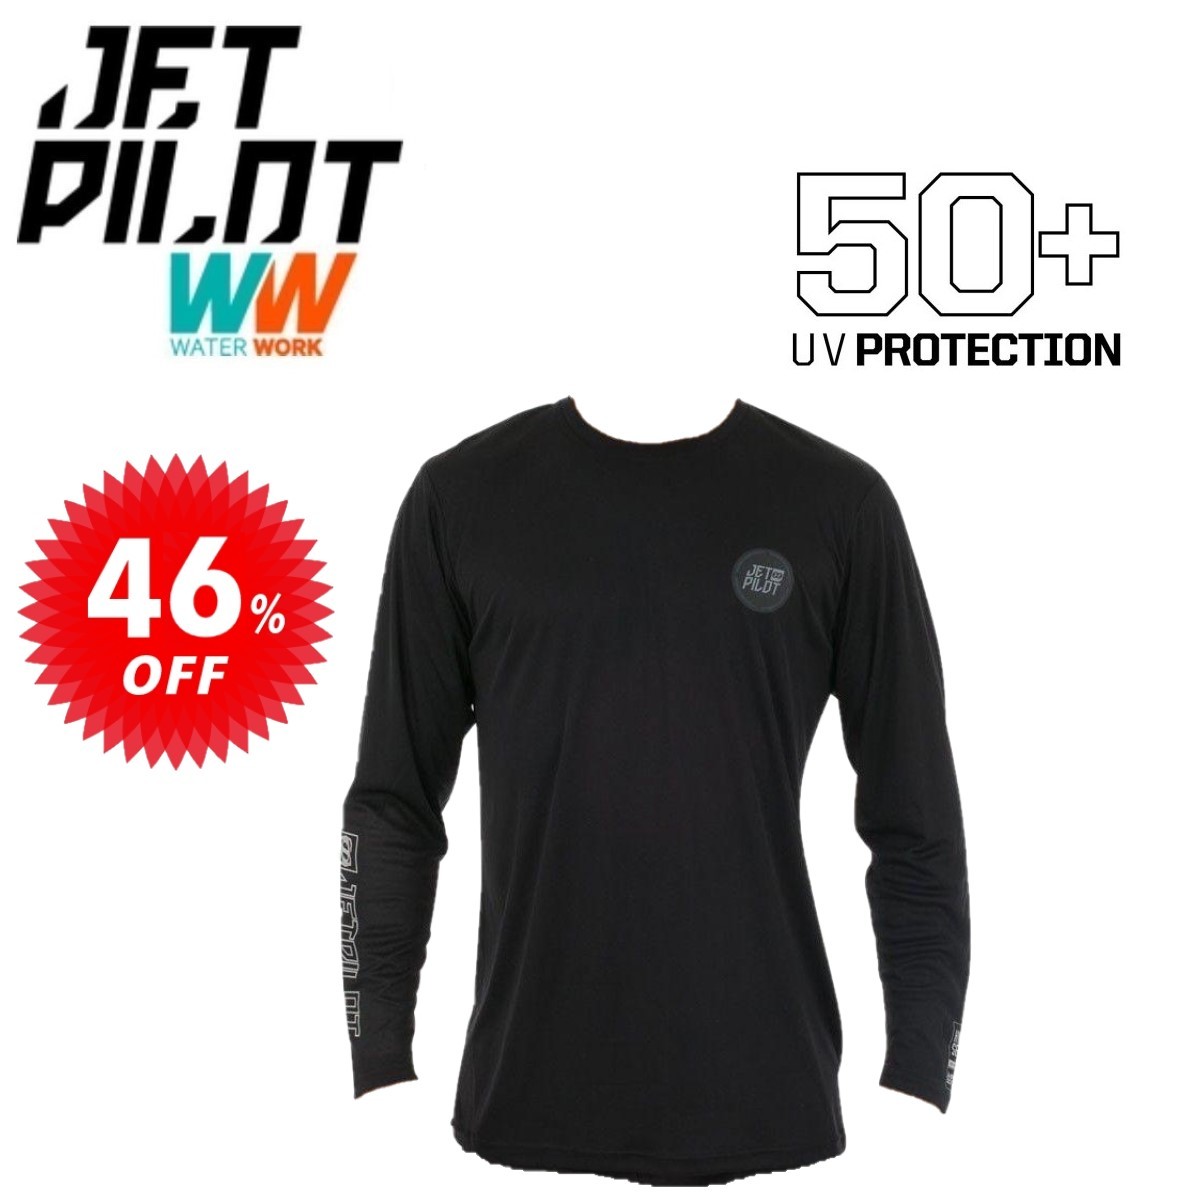  jet Pilot гидро футболка скорость . распродажа 46% off бесплатная доставка ko-p Roo z Fit L/S гидро T S черный S17611 long T